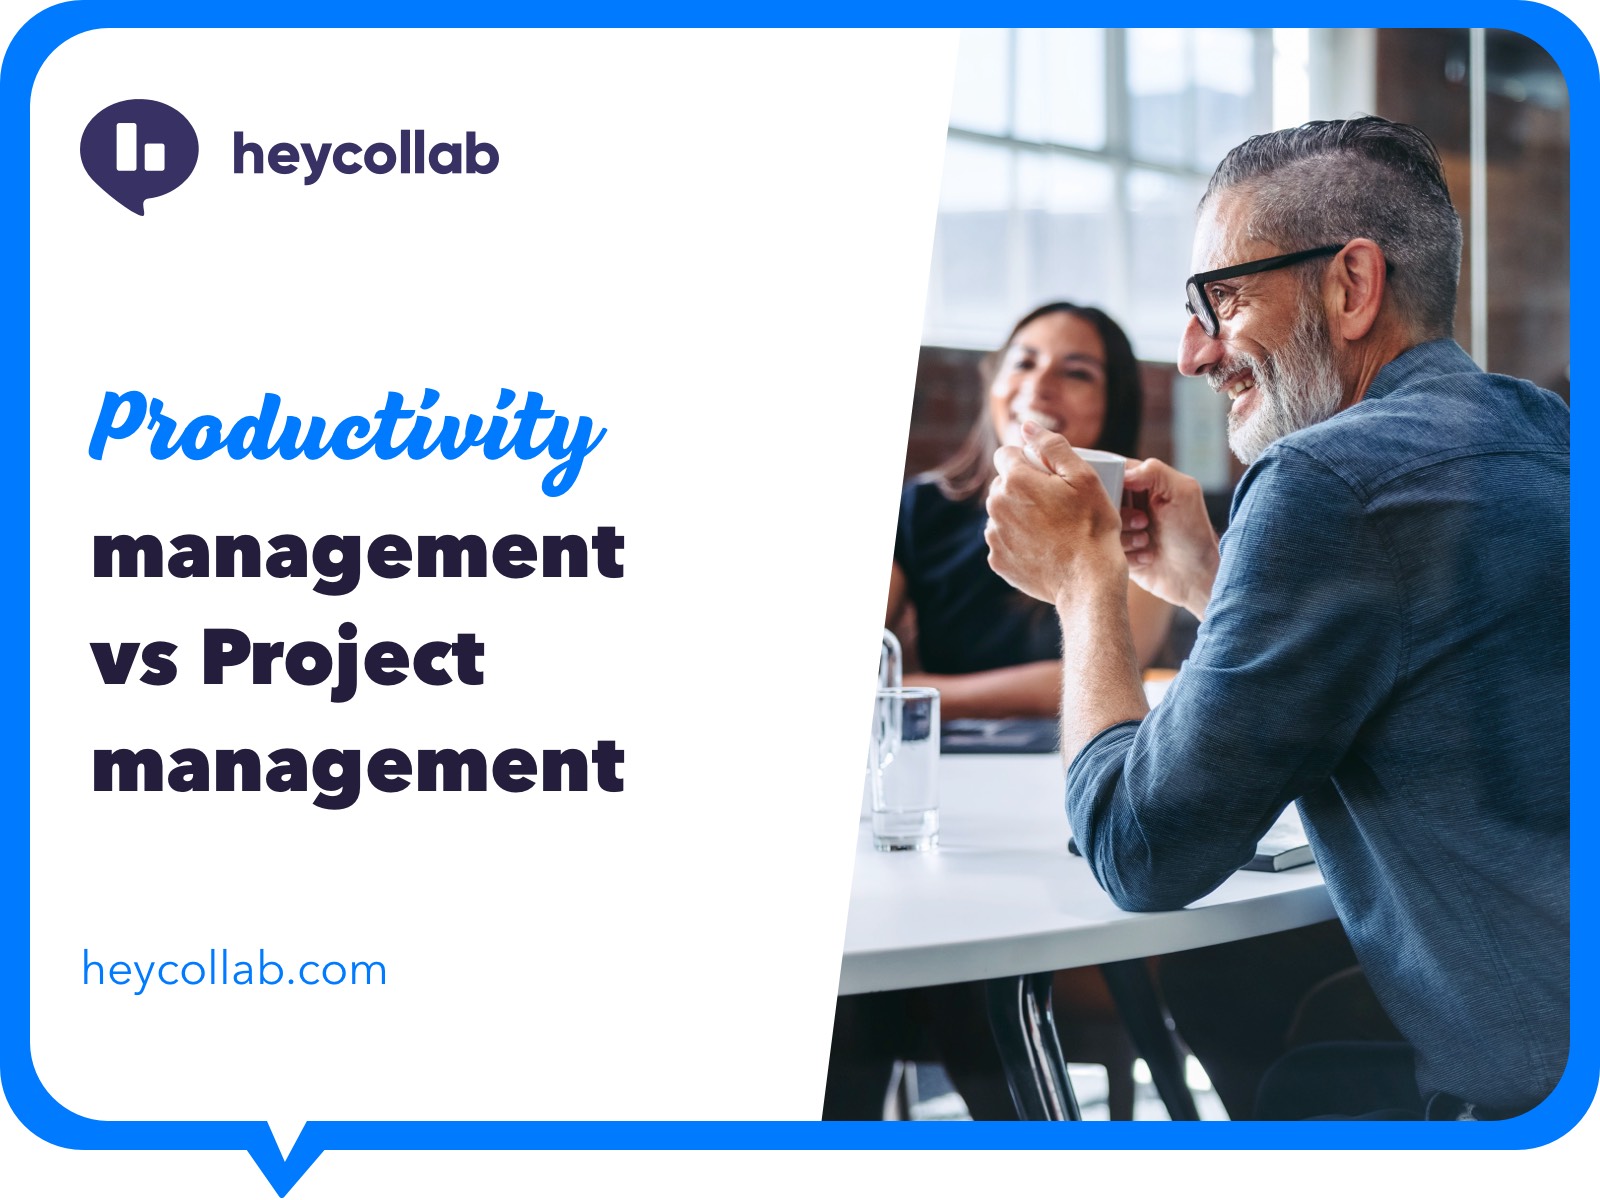 heycollap productivity management tool